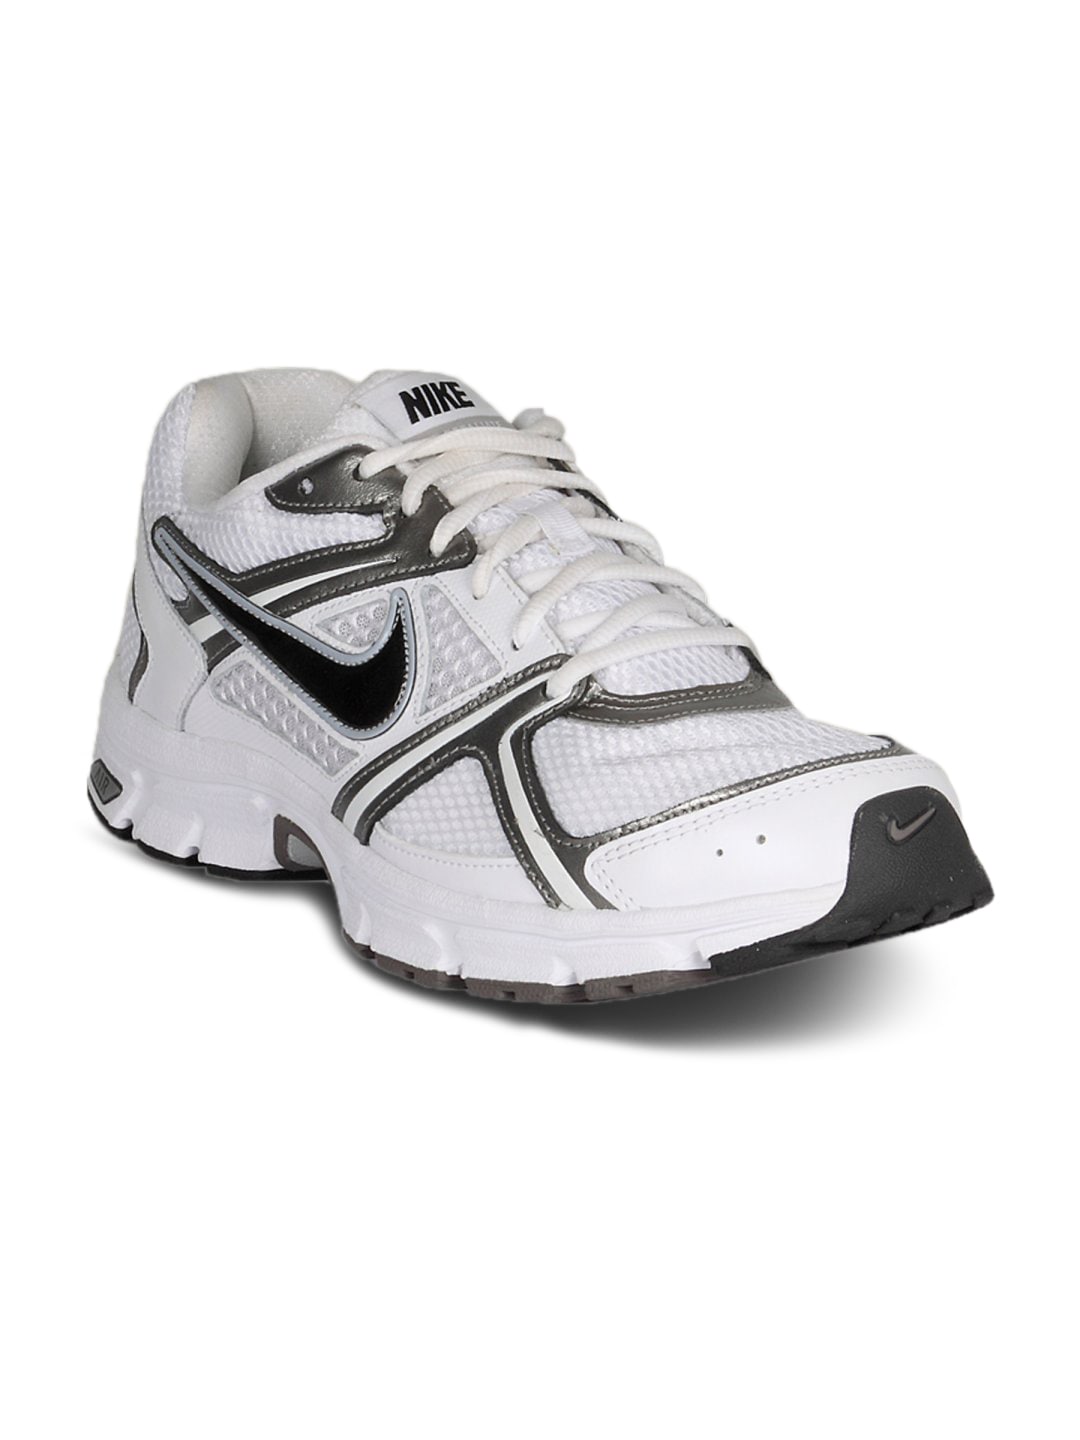 Nike Men's Air Retaliate Grey White Shoe